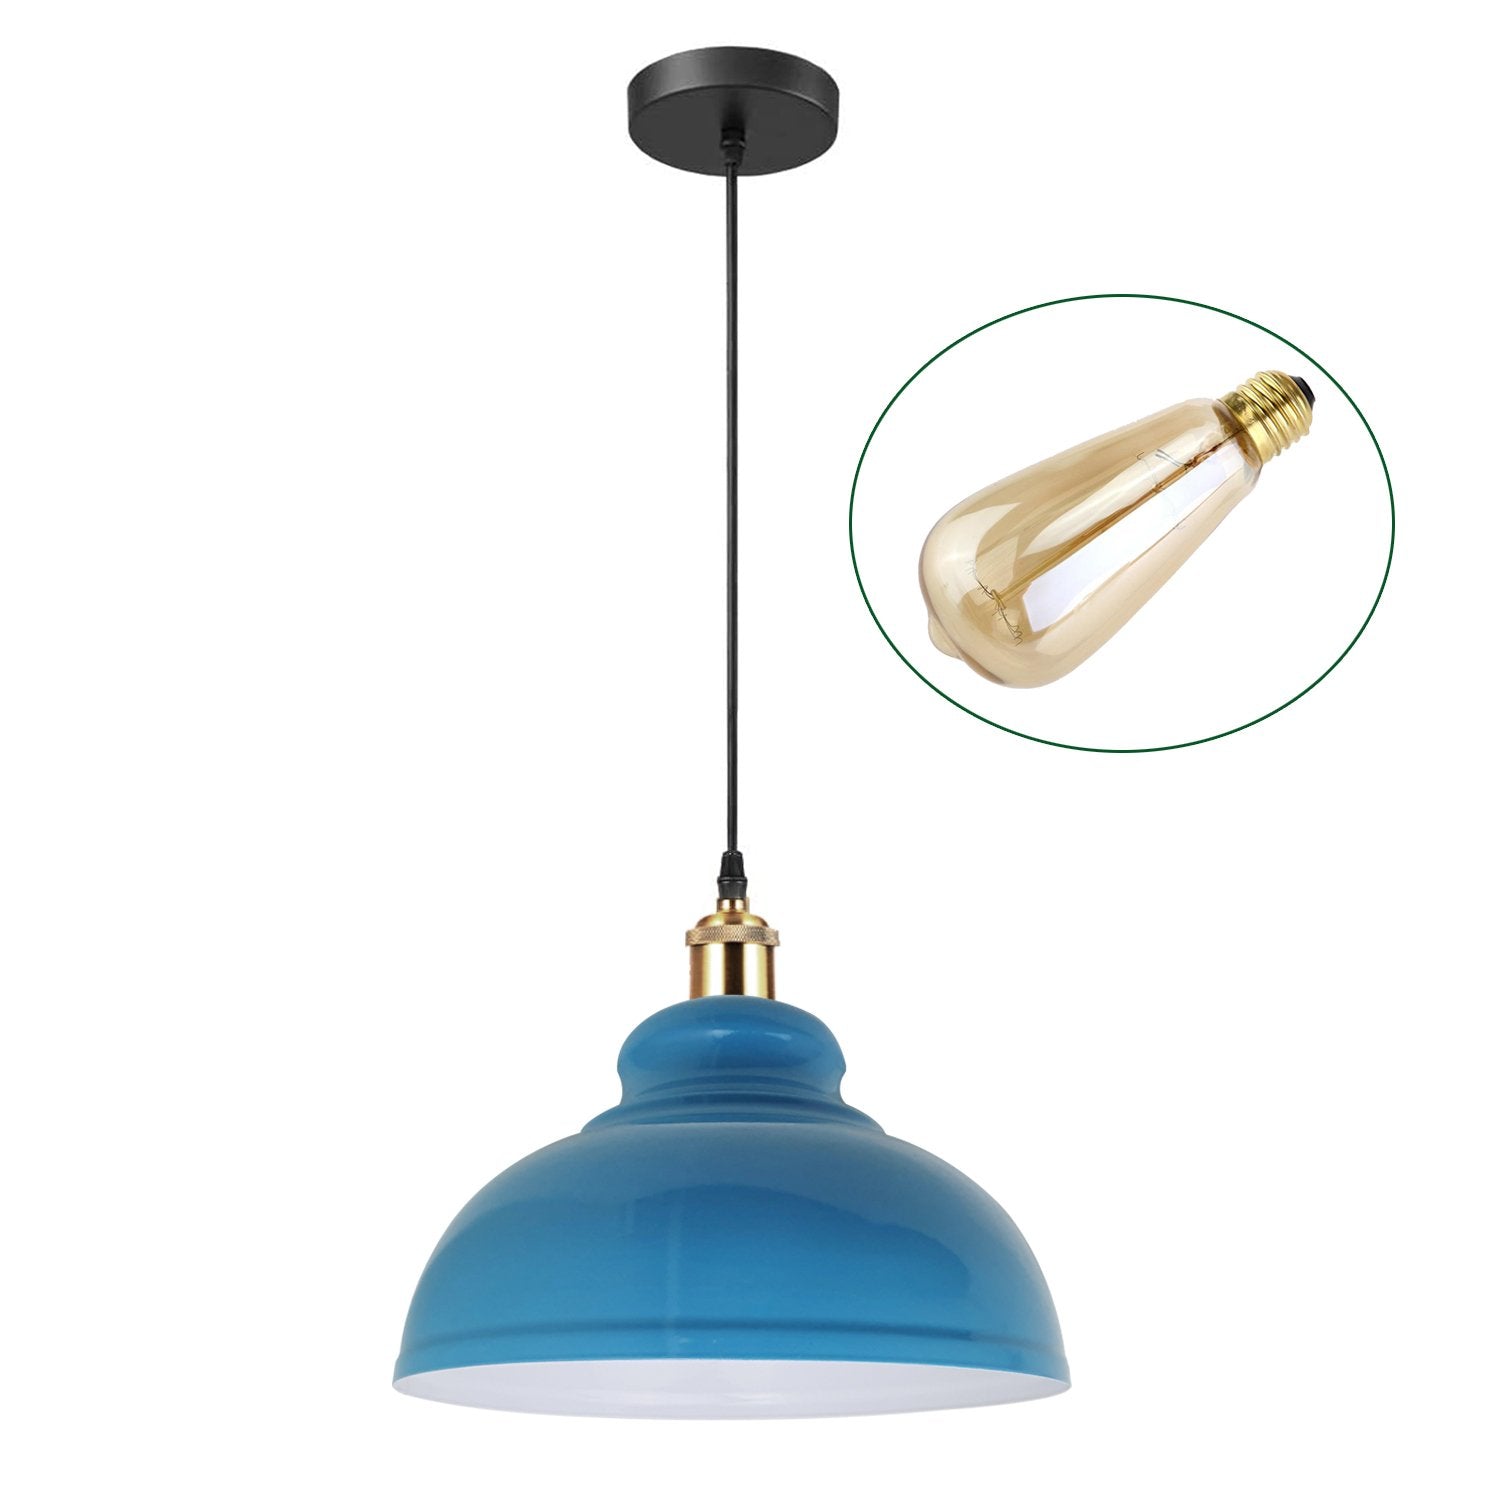 Retro Pendant Light Shade Vintage Industrial Ceiling Lighting LED Restaurant Loft With Free Bulb~2101 - LEDSone UK Ltd